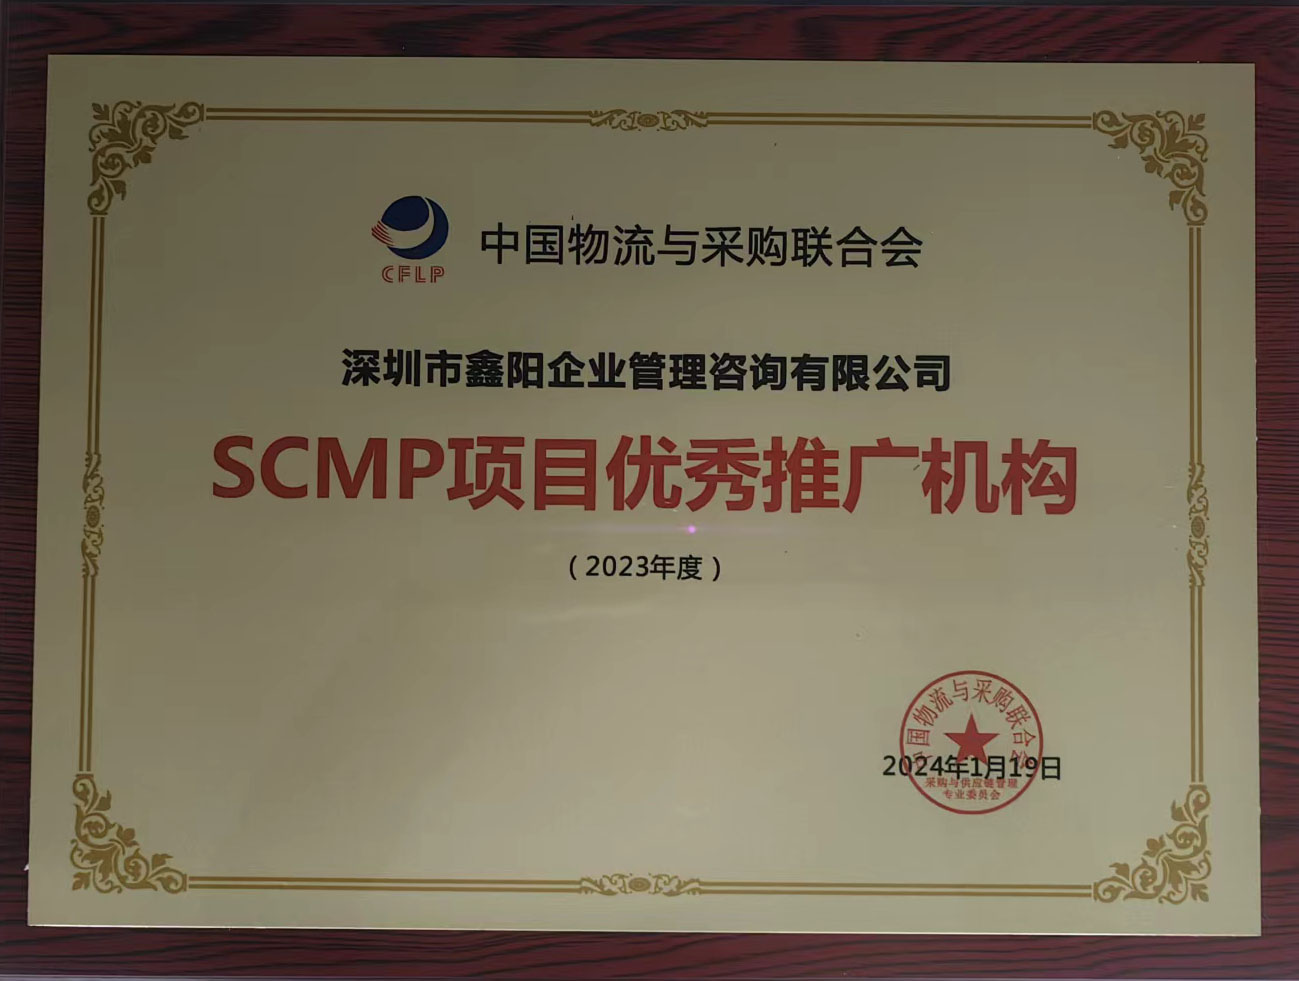 SCMP优秀推广机构